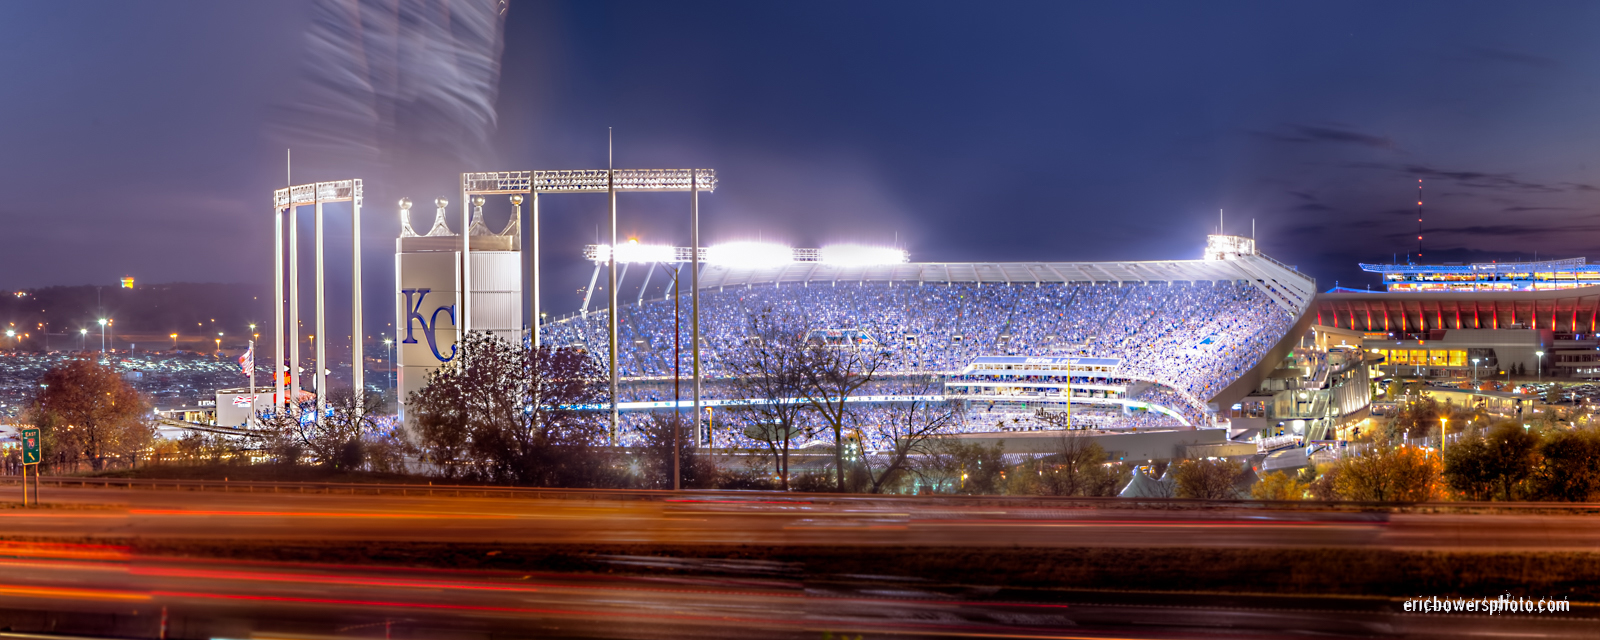 Kansas City Royals Kauffman Stadium